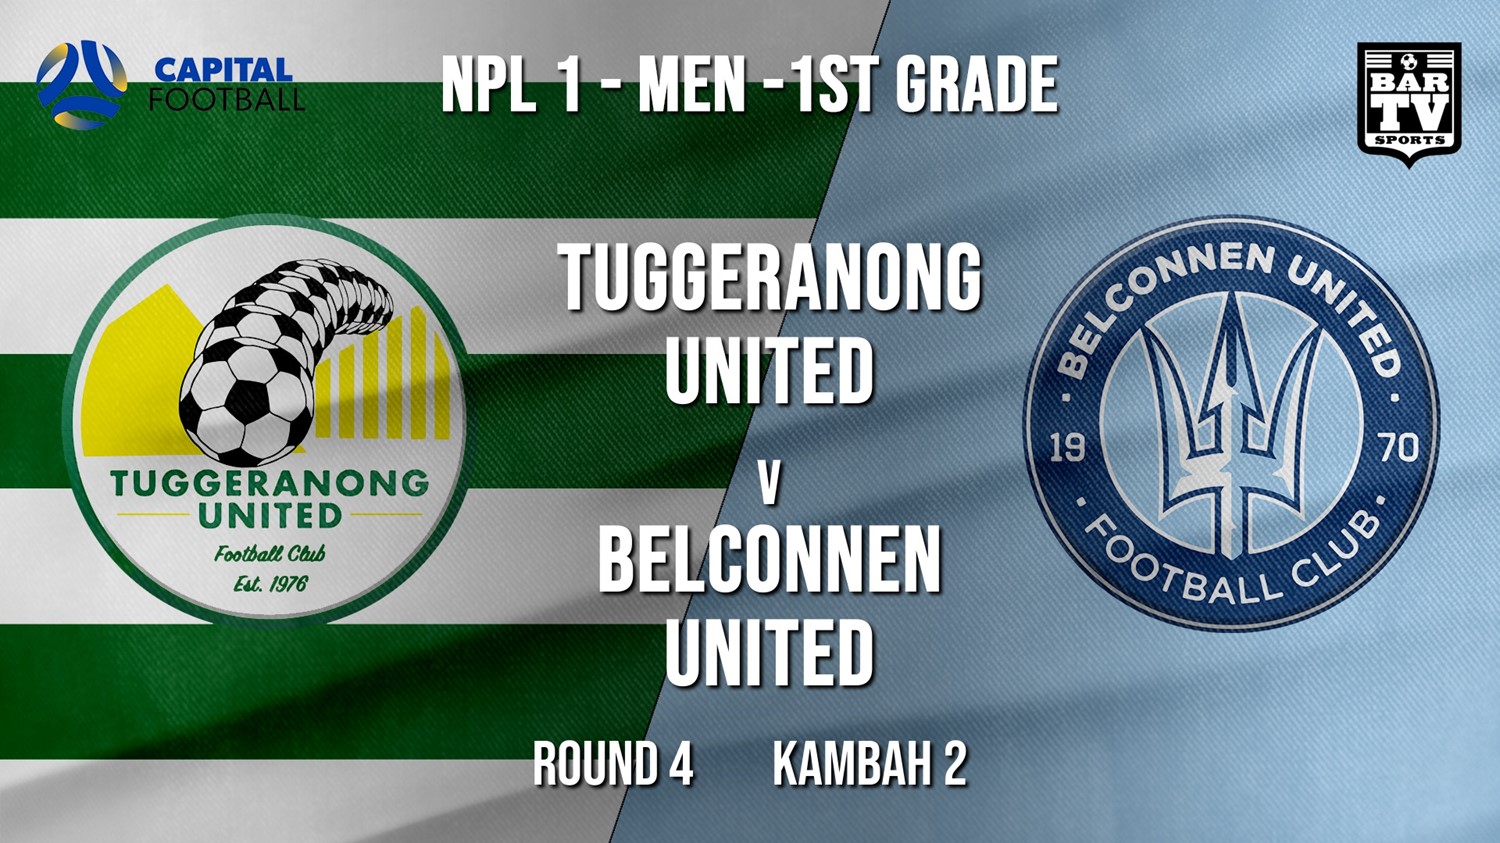 NPL - CAPITAL Round 4 - Tuggeranong United FC v Belconnen United Minigame Slate Image